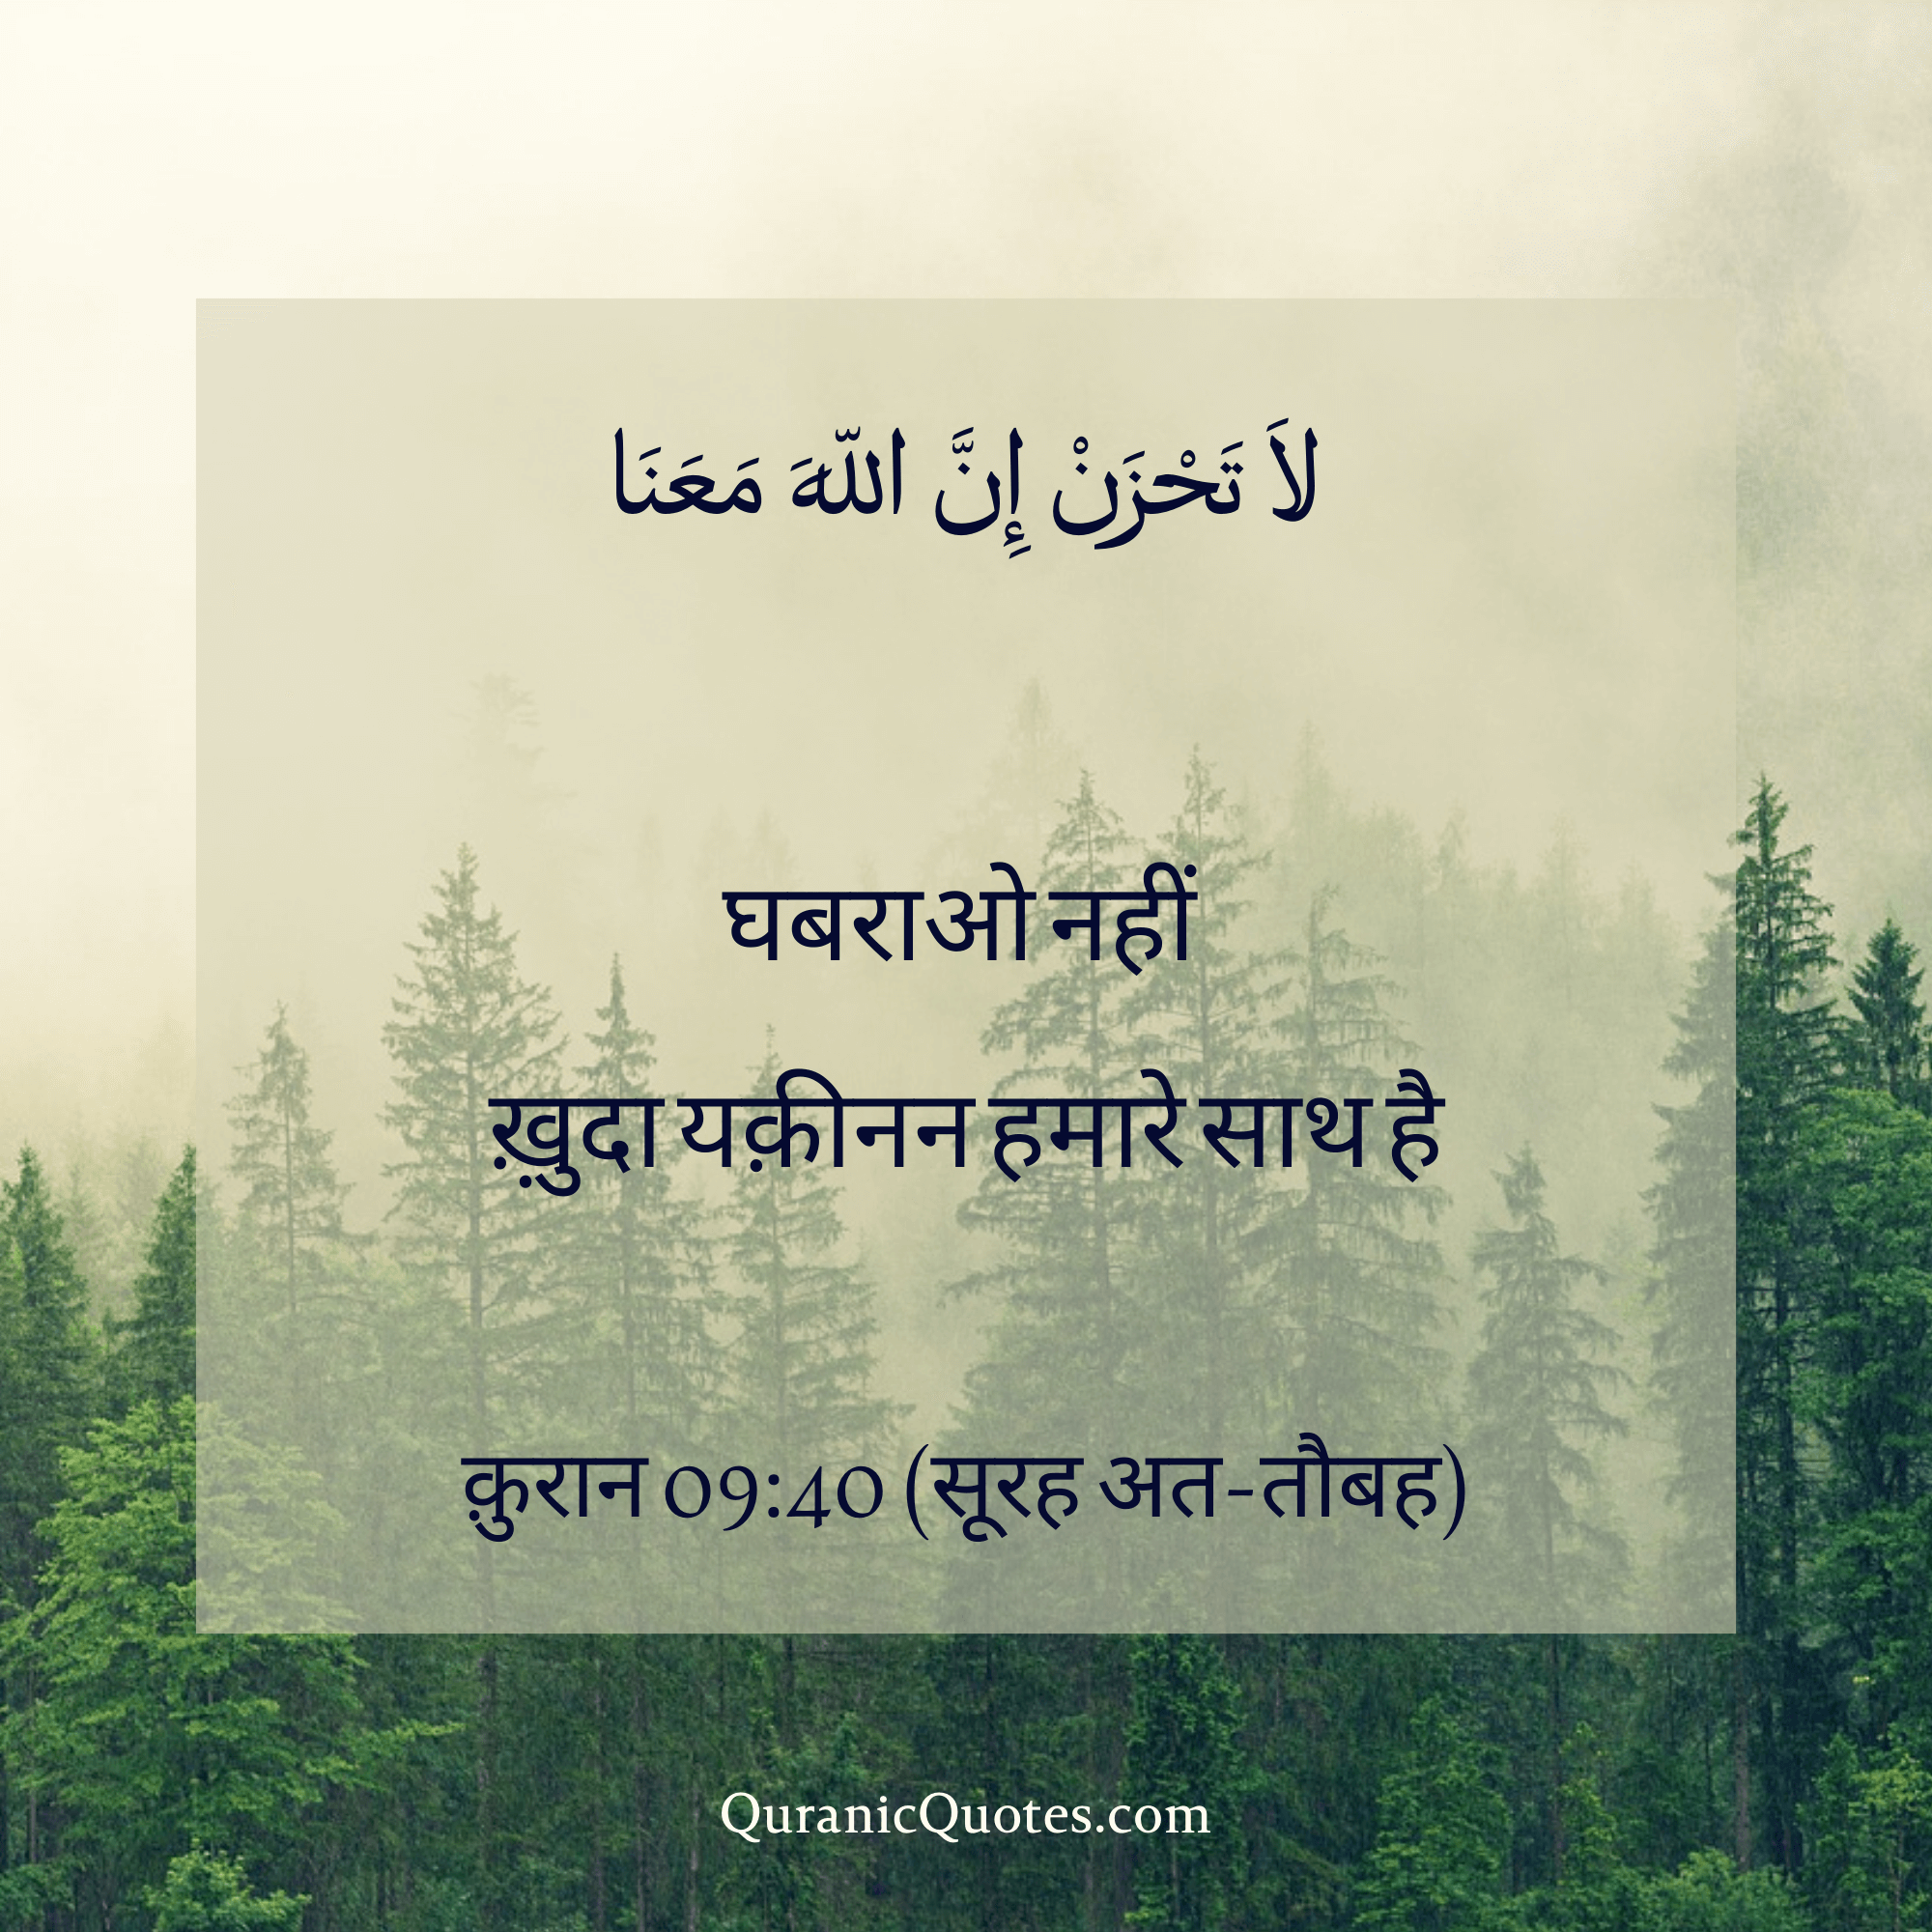 Quranic Quotes in Hindi 354